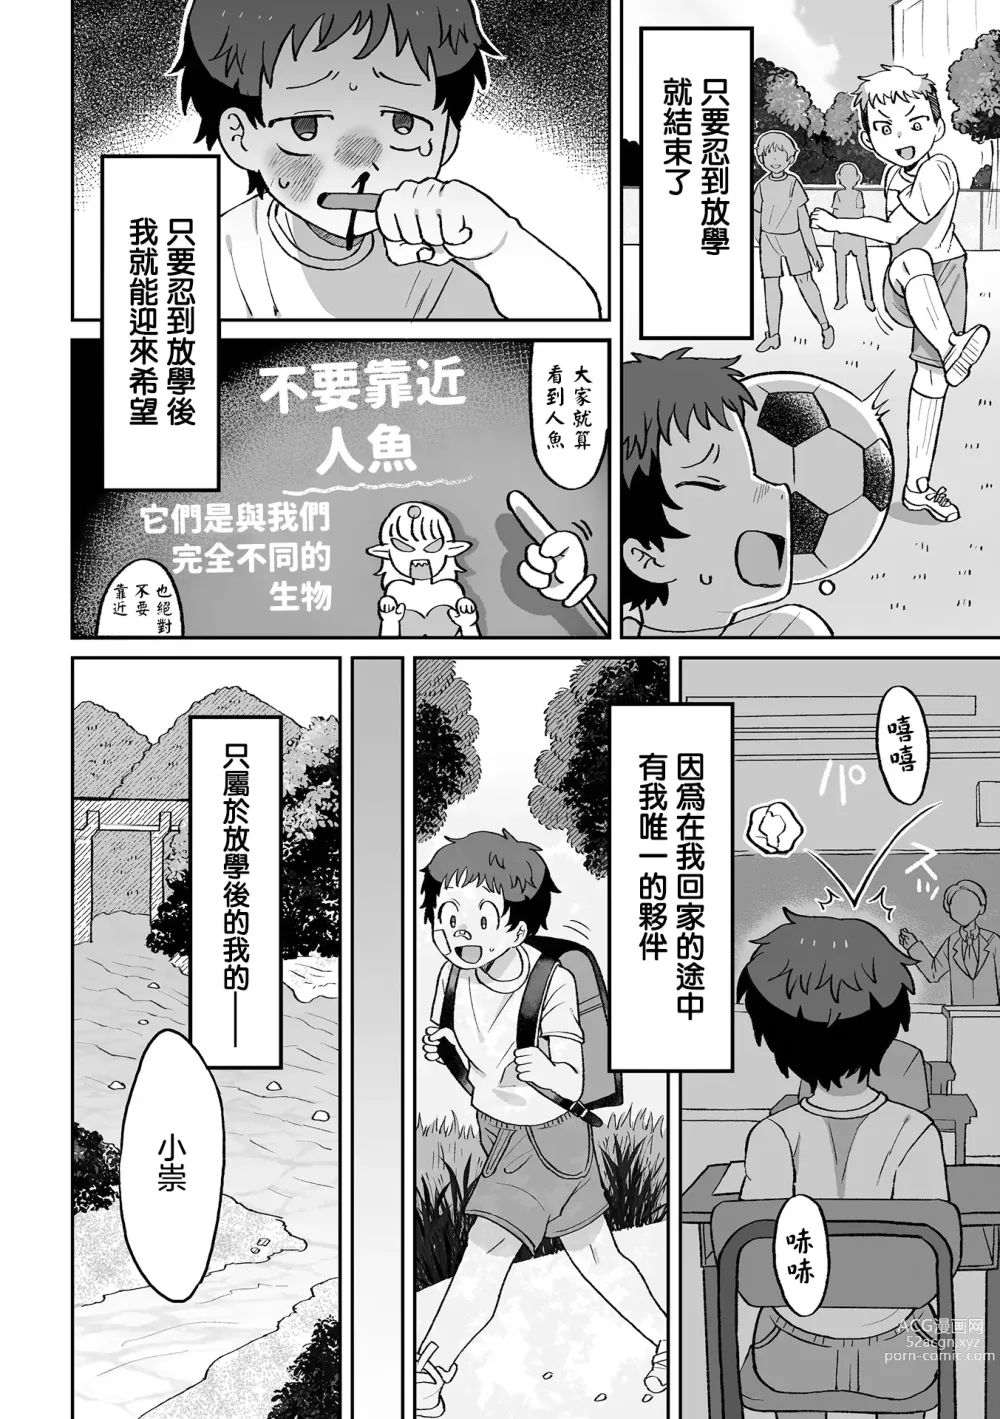 Page 3 of manga 我的姐姐